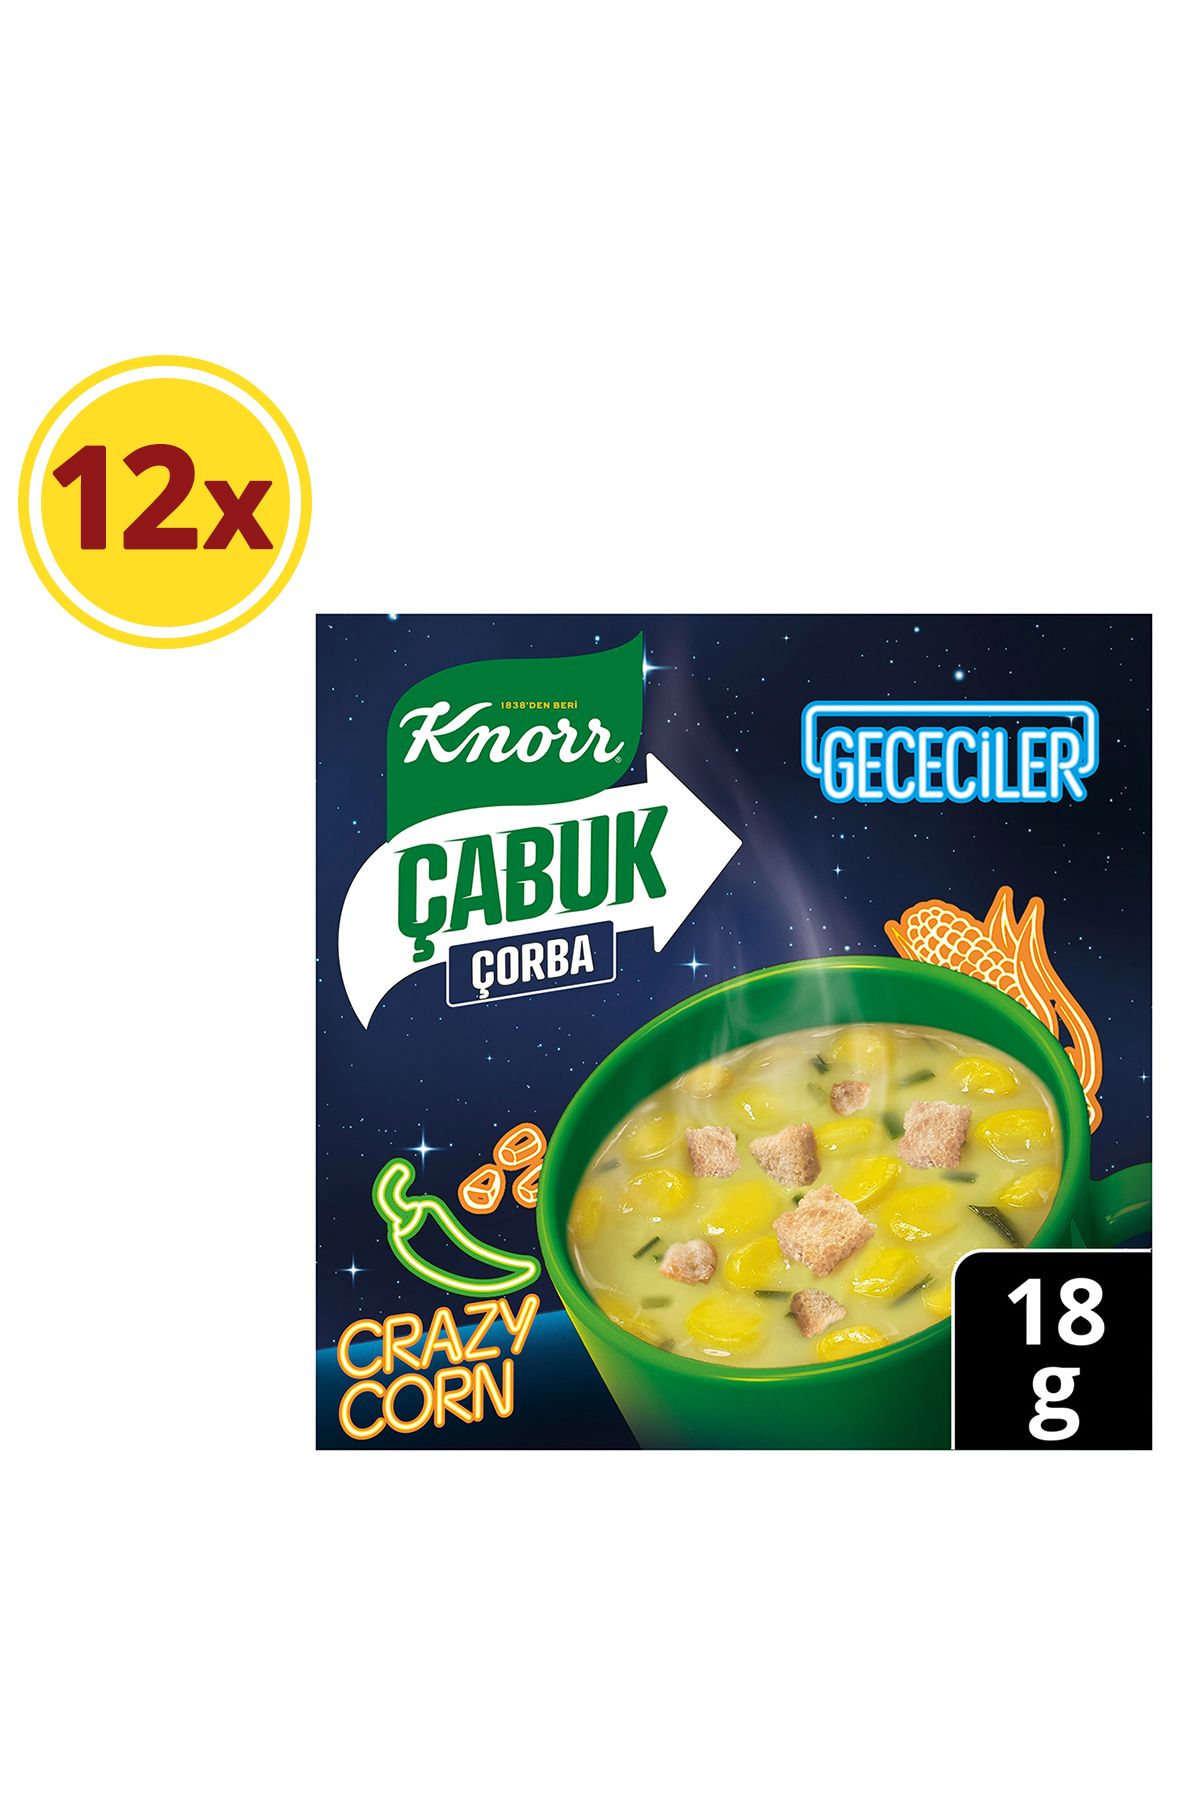 Knorr Çabuk Çorba Gececiler Crazy Corn 18g X12 Adet